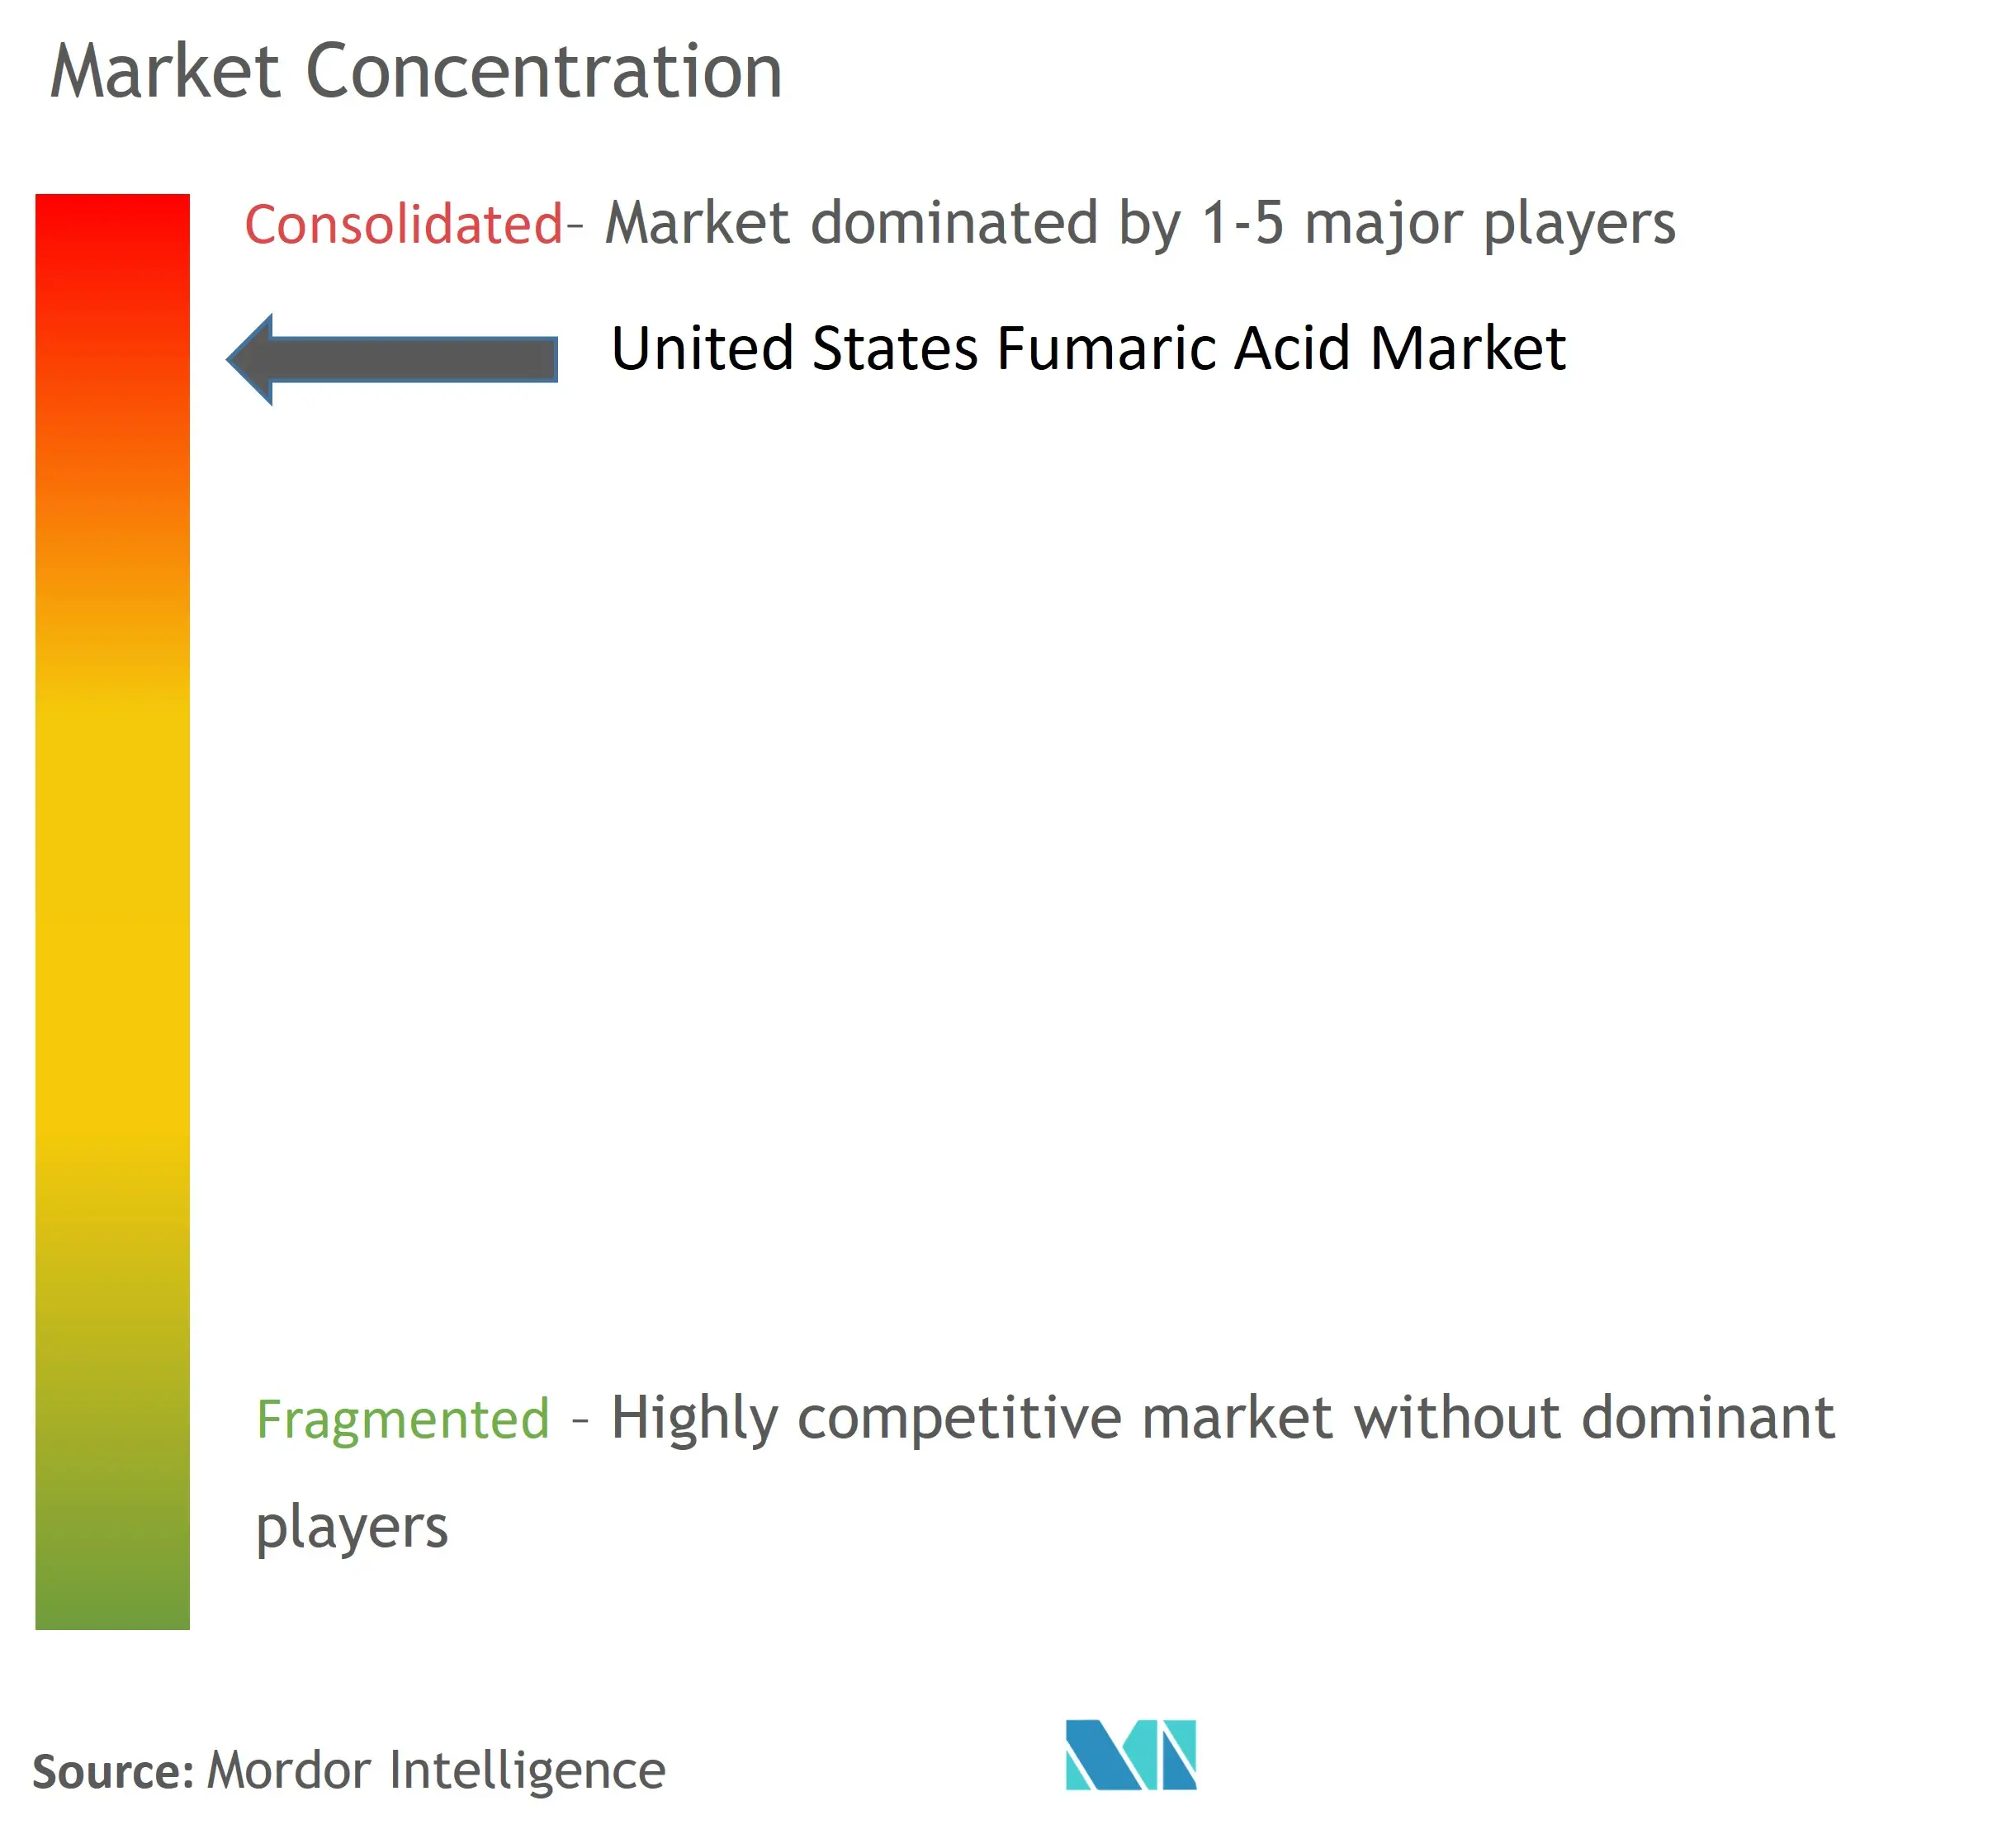 US Fumaric Acid Market Concentration